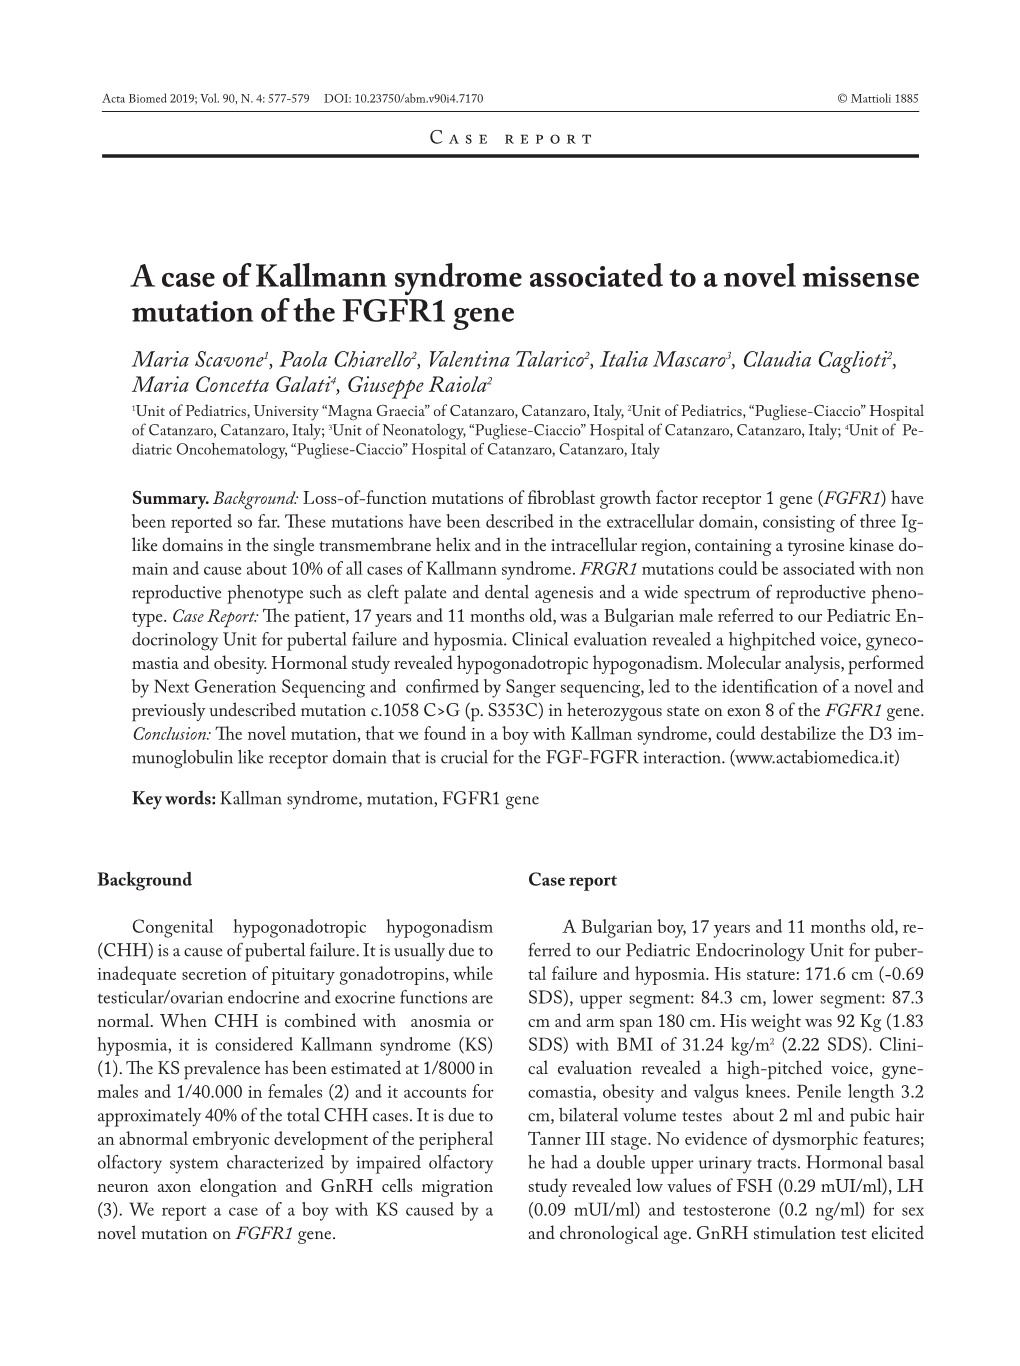 A Case of Kallmann Syndrome Associated to a Novel Missense Mutation of the FGFR1 Gene